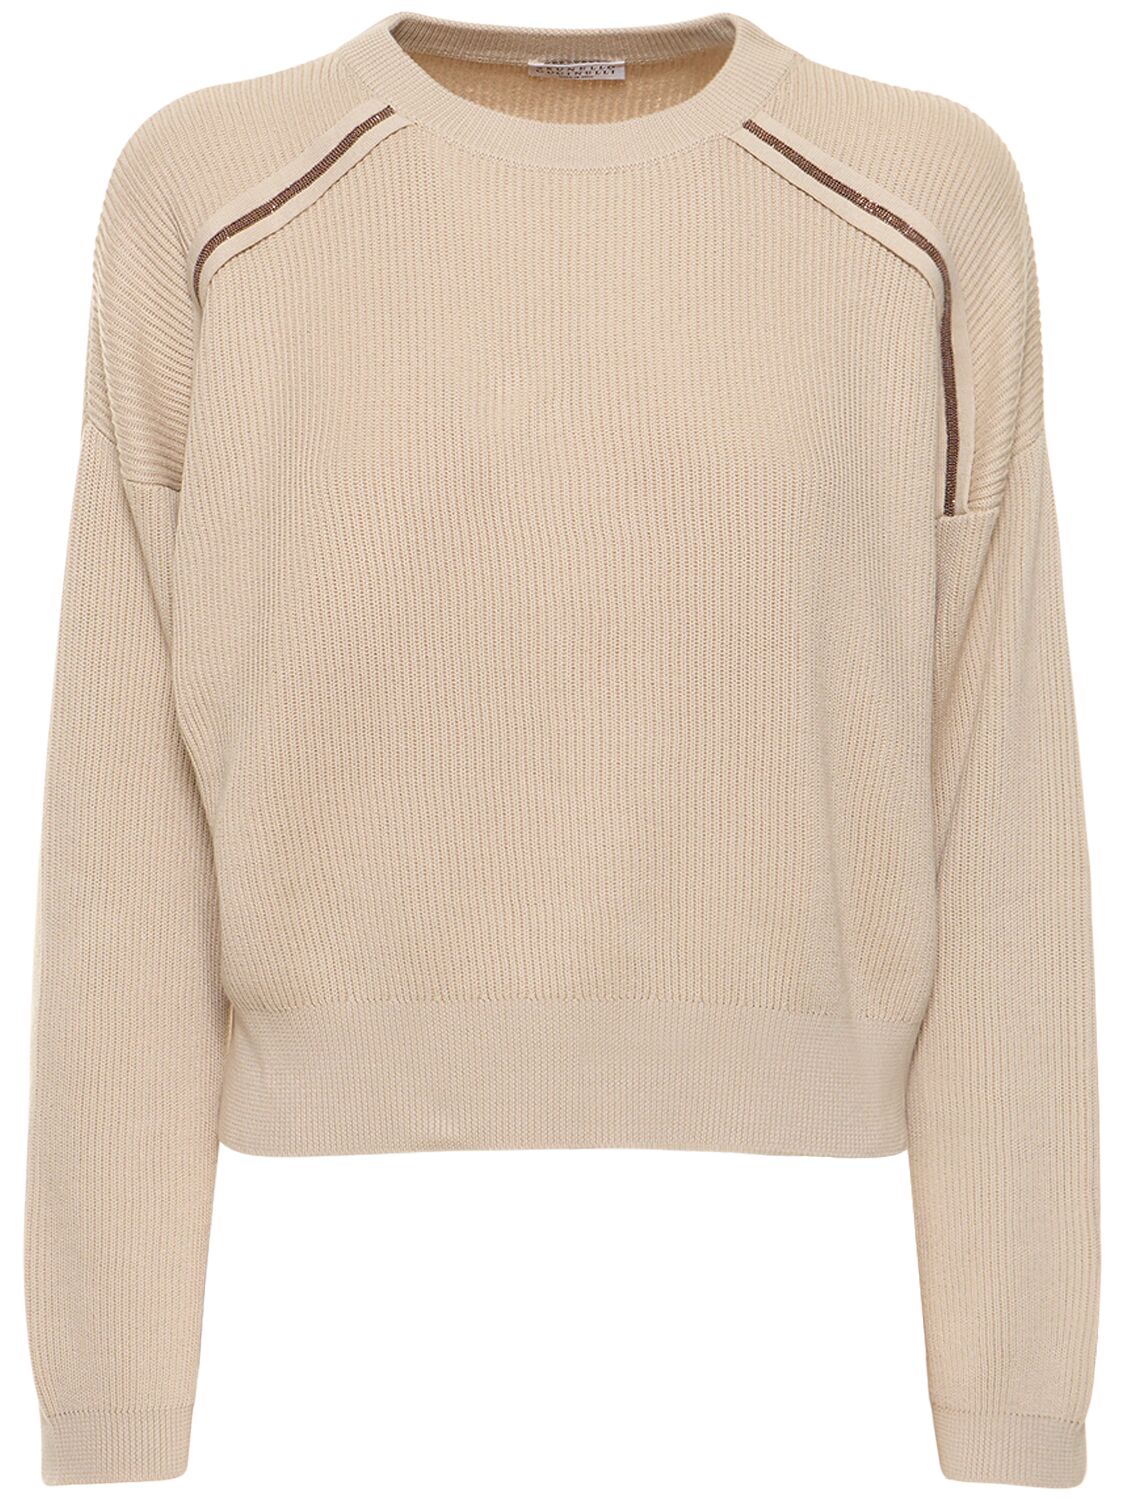 BRUNELLO CUCINELLI Embellished Cotton Crewneck Sweater